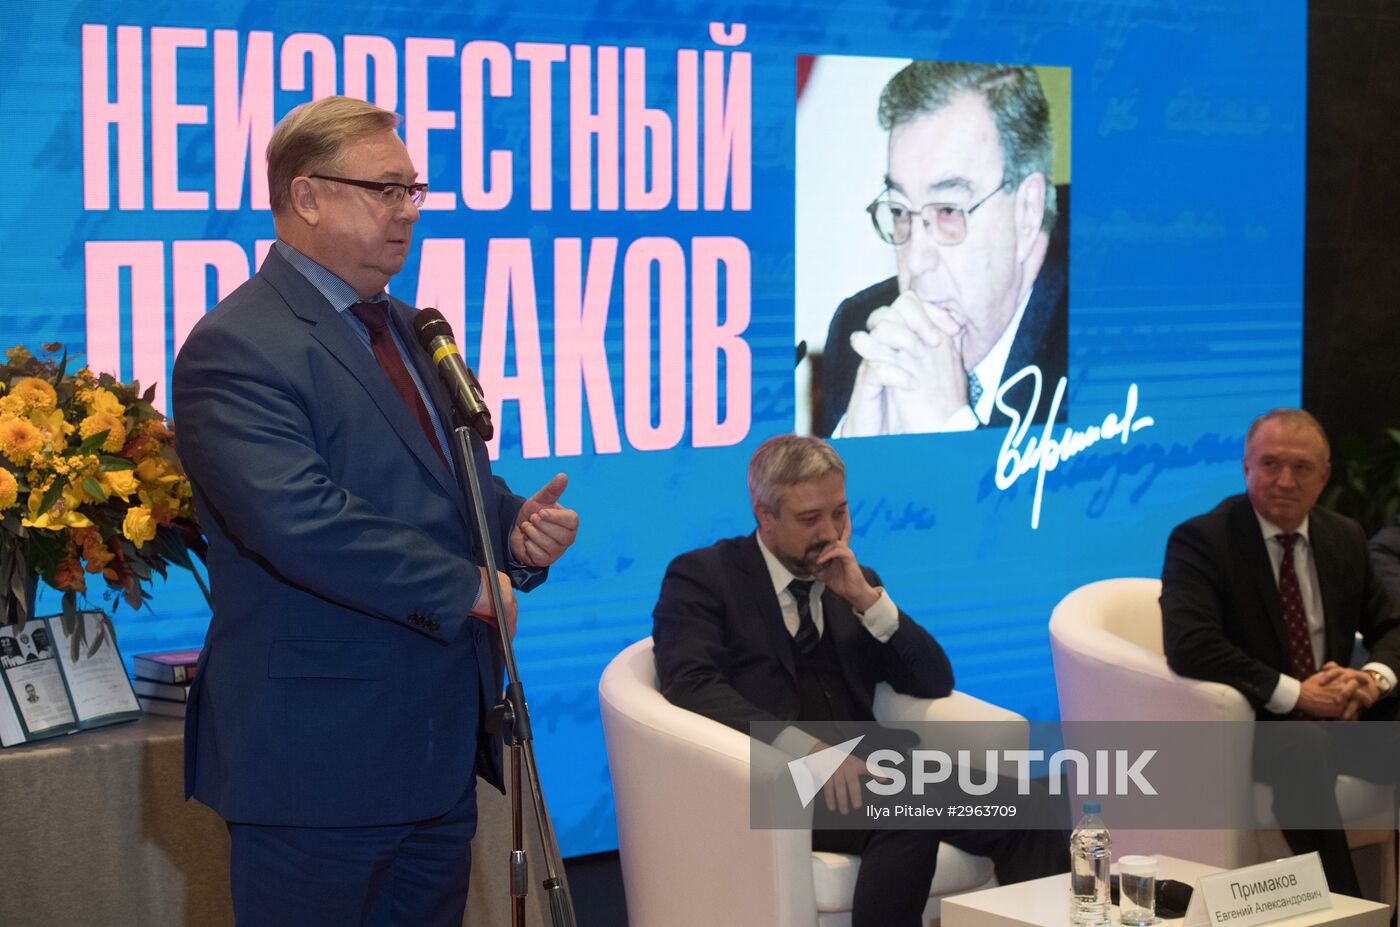 Presentation of The Unknown Primakov edition